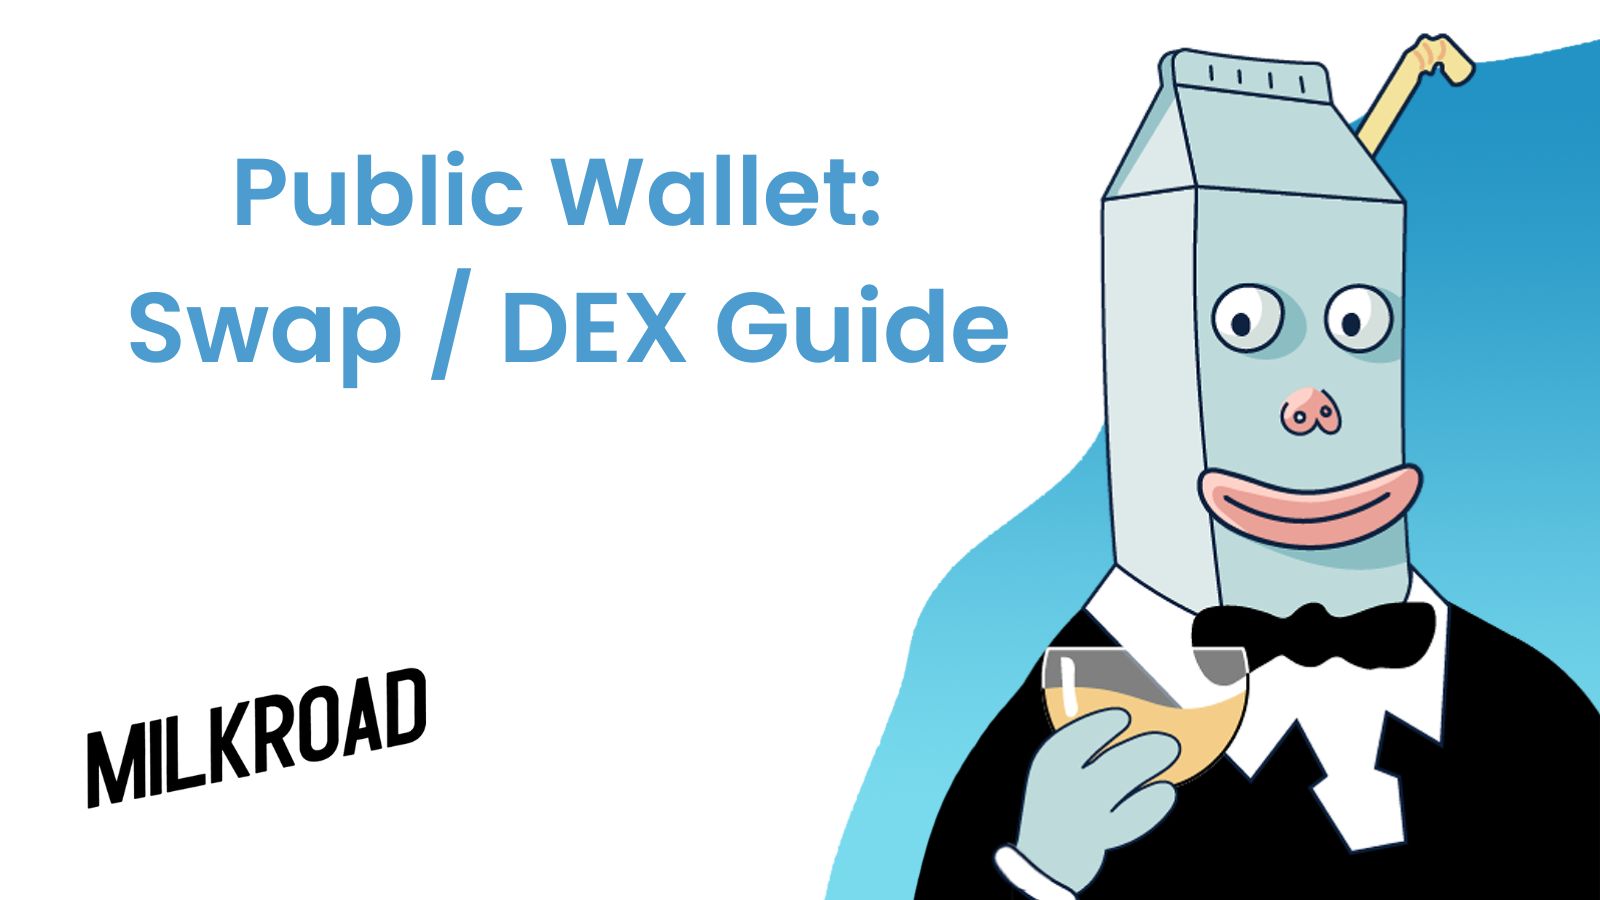 Public Wallet: Swap / DEX Guide